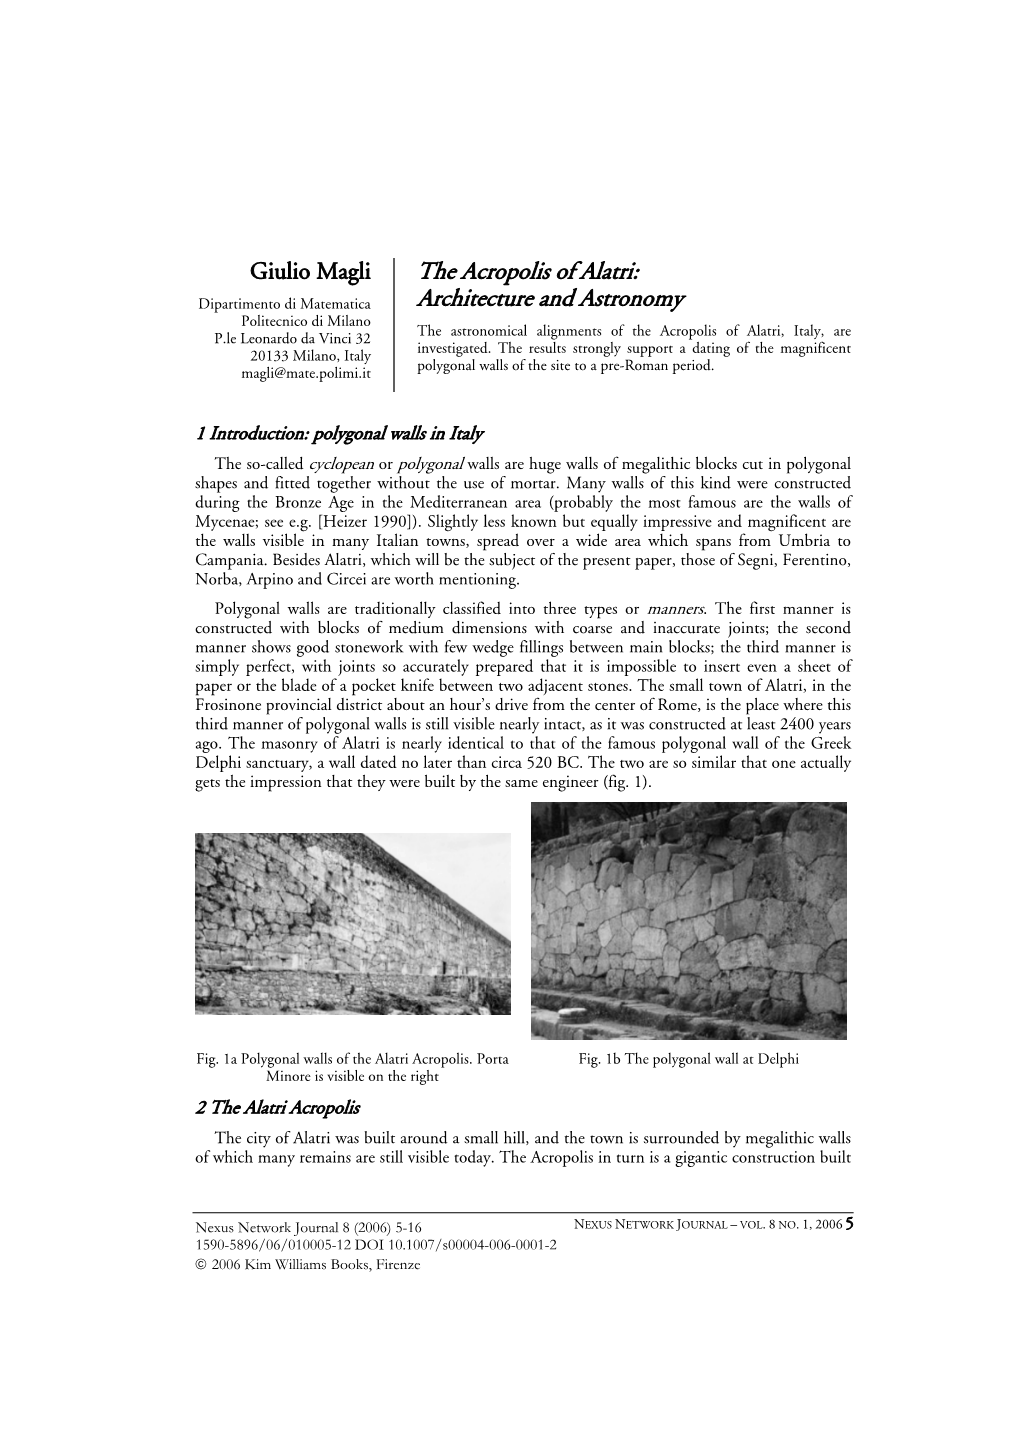 The Acropolis of Alatri: Architecture and Astronomy